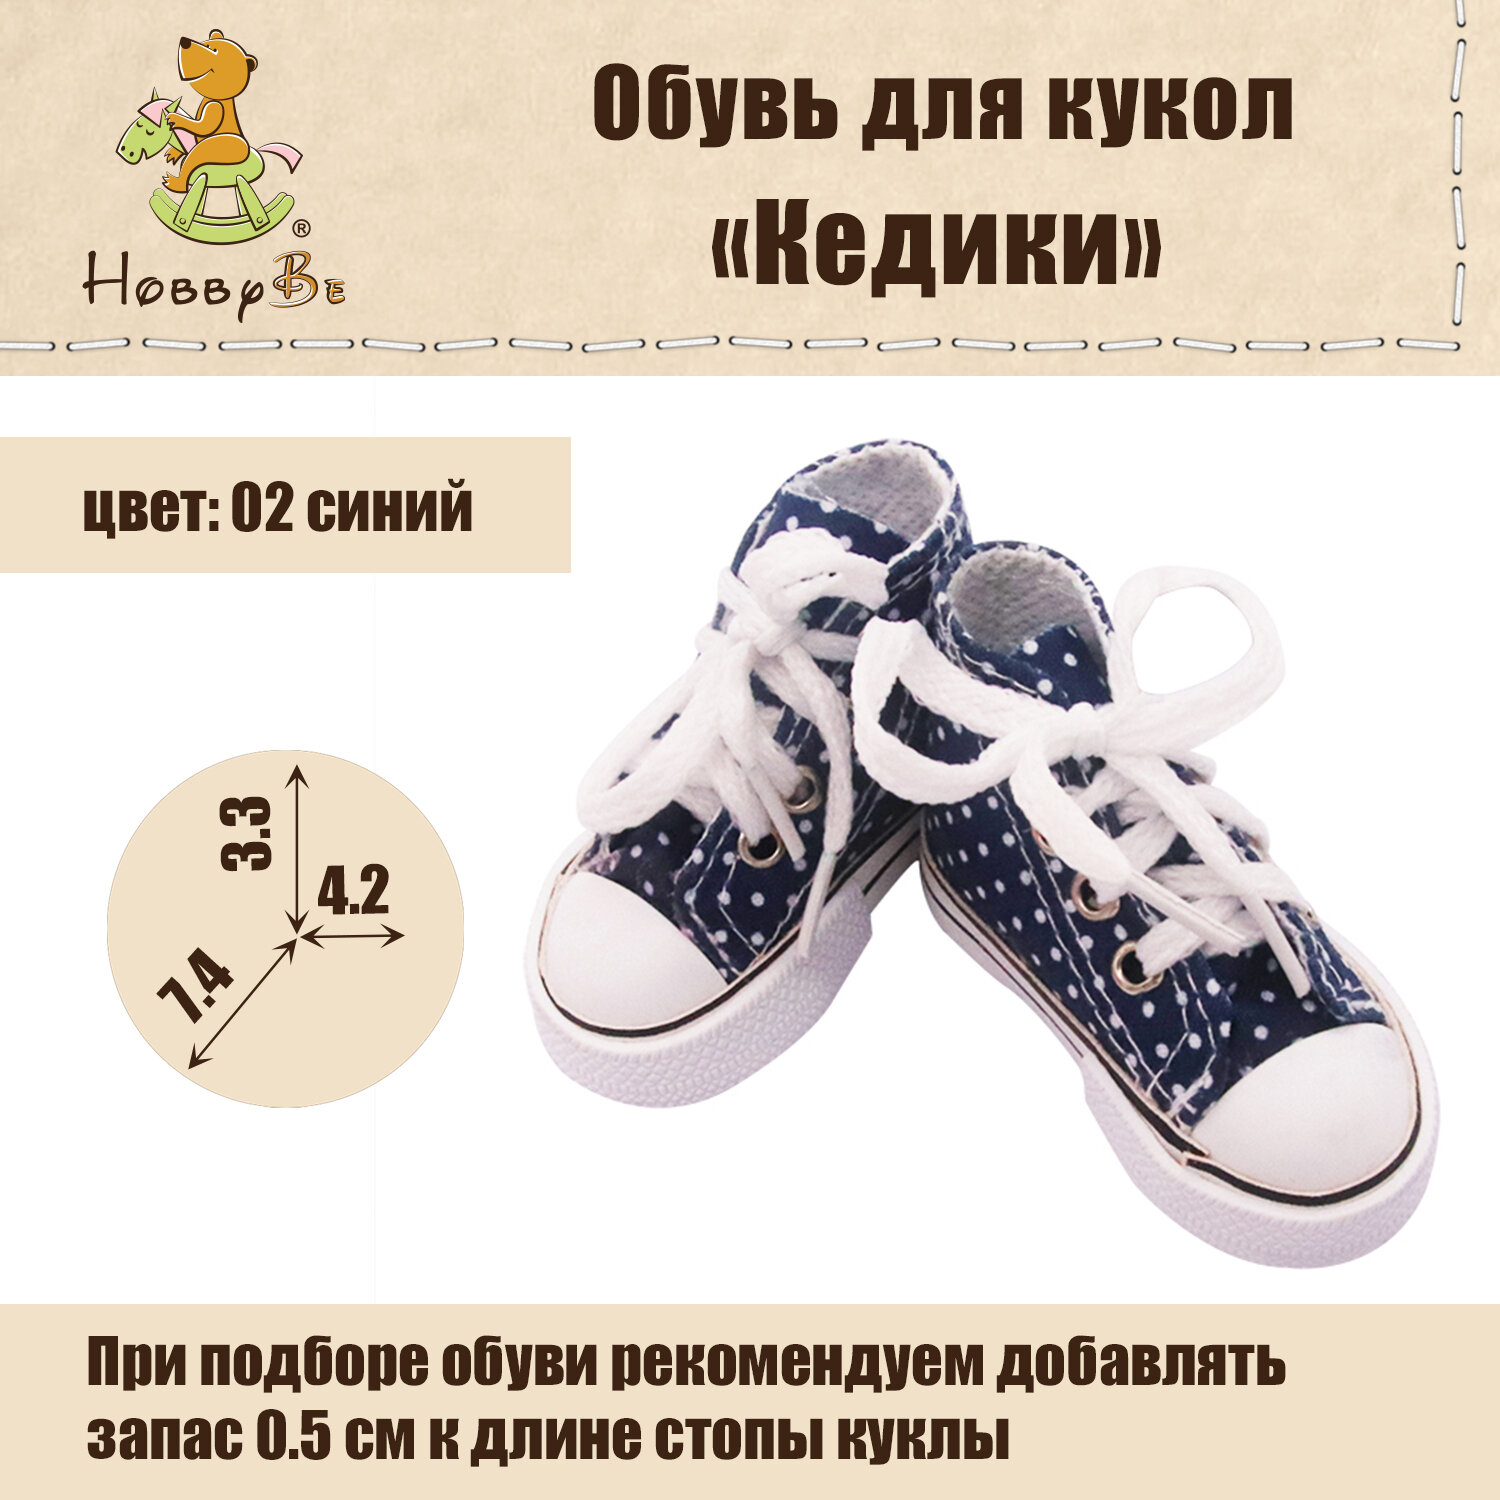 Обувь для кукол "HobbyBe" KBG-2 аксессуары "Кедики" 7.5 см 02 синий